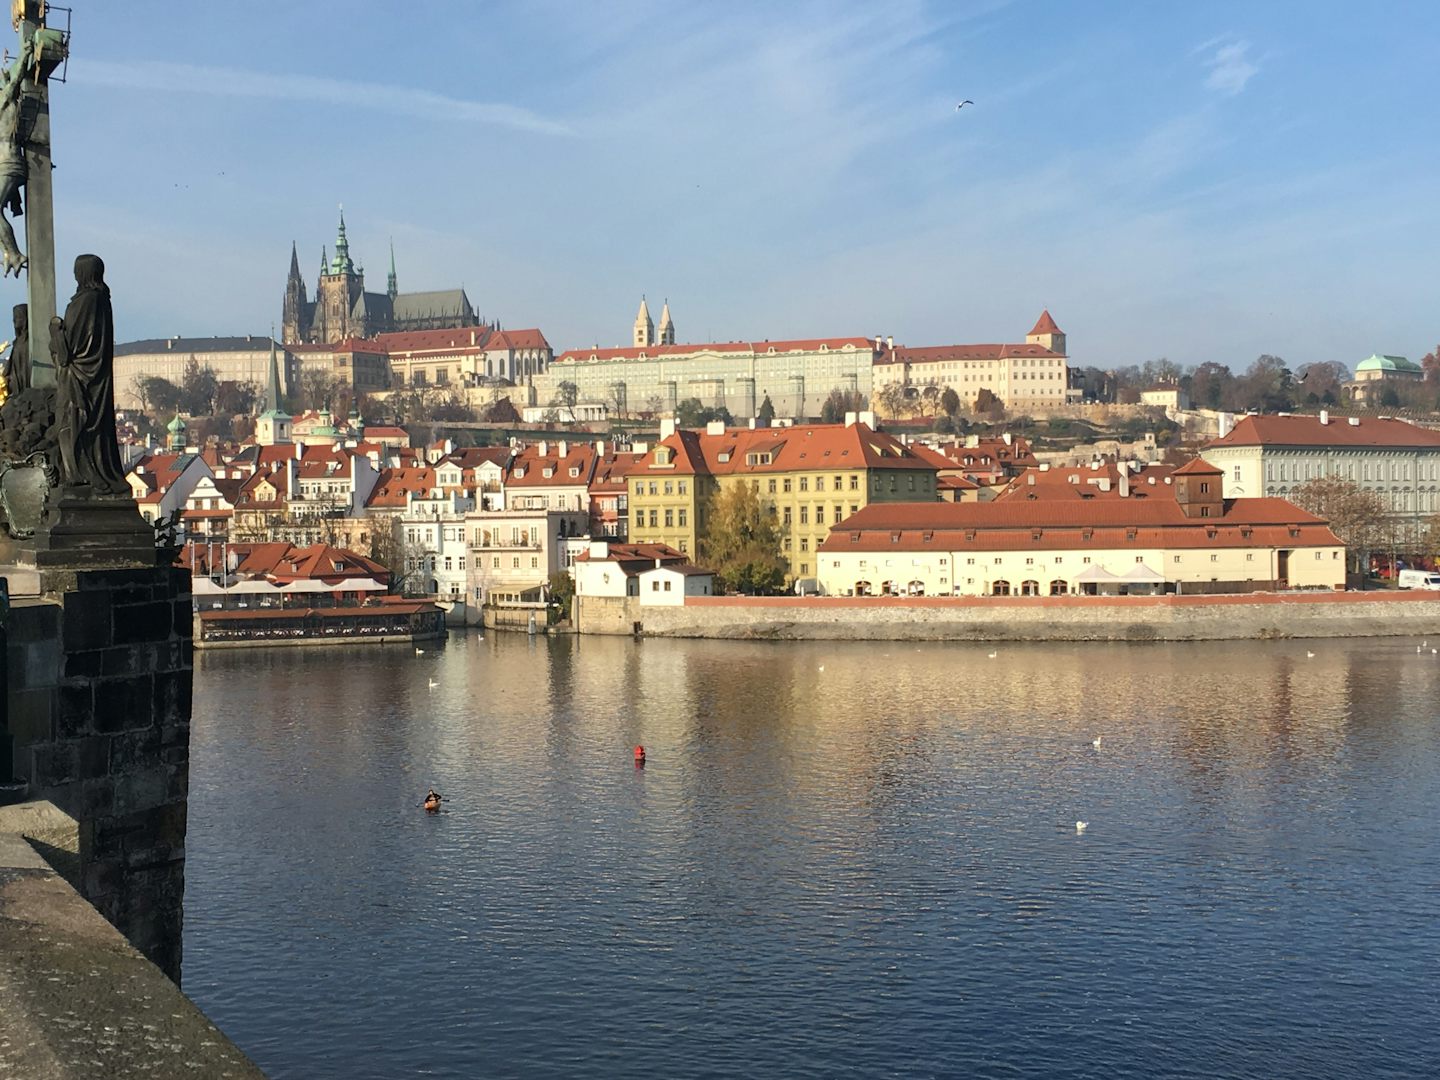 City of Prague, shot from the Charles Bridge.